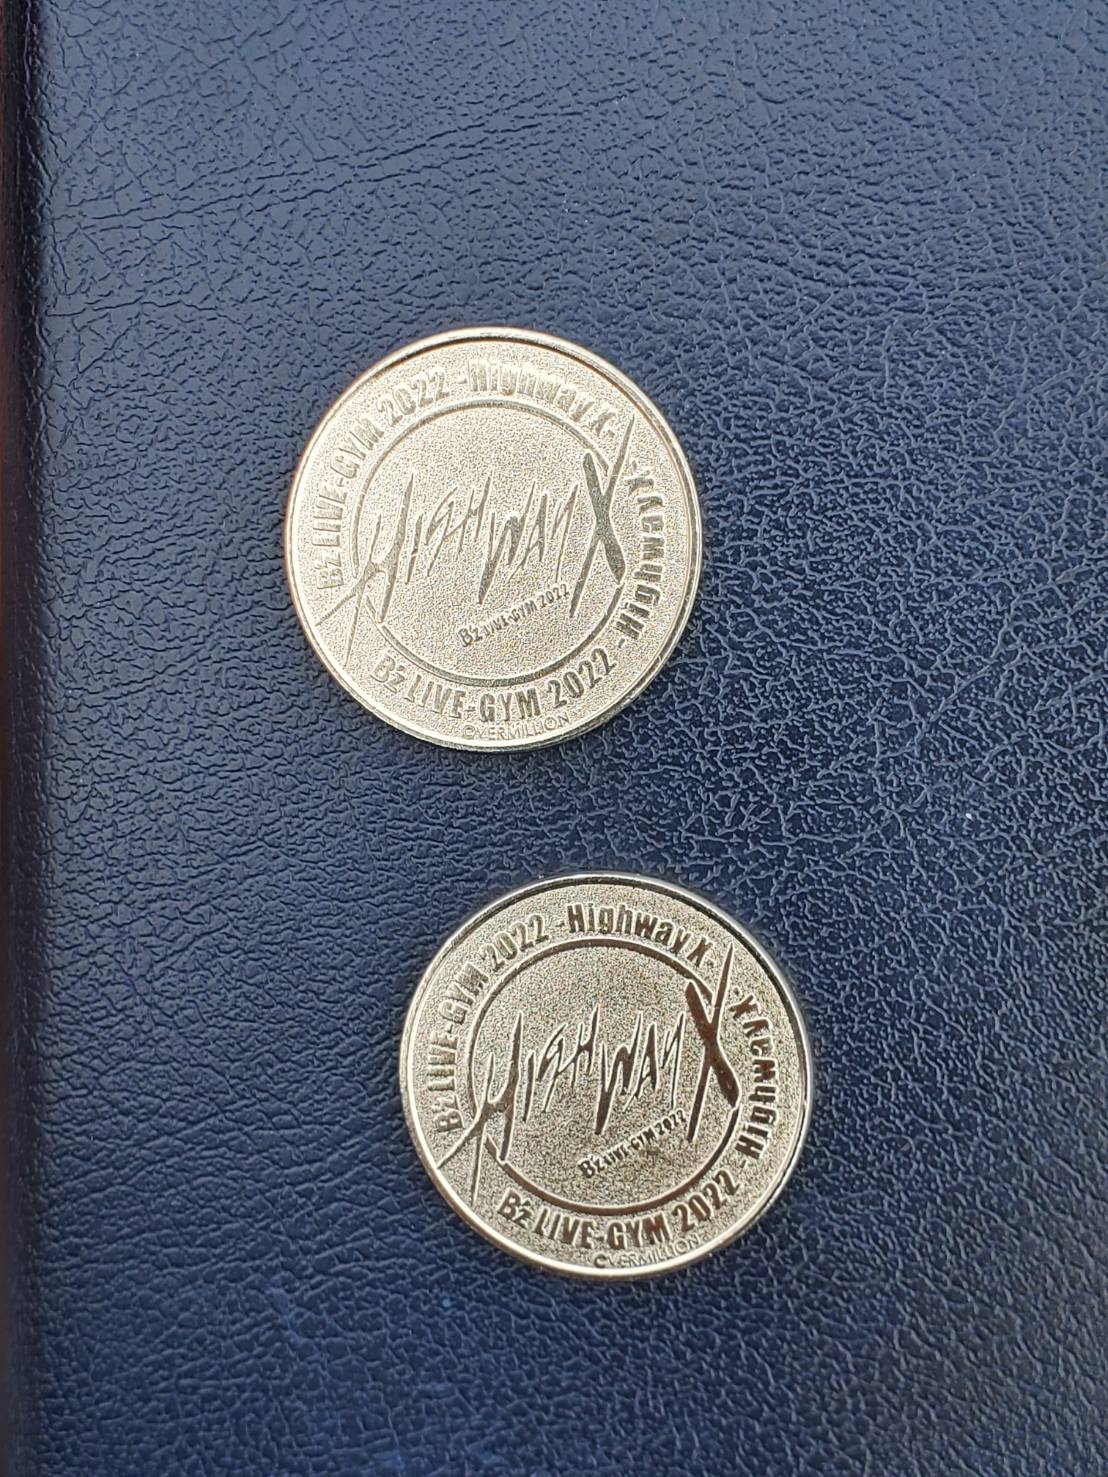 B'z『Highway X』ツアーの専用コインの写真